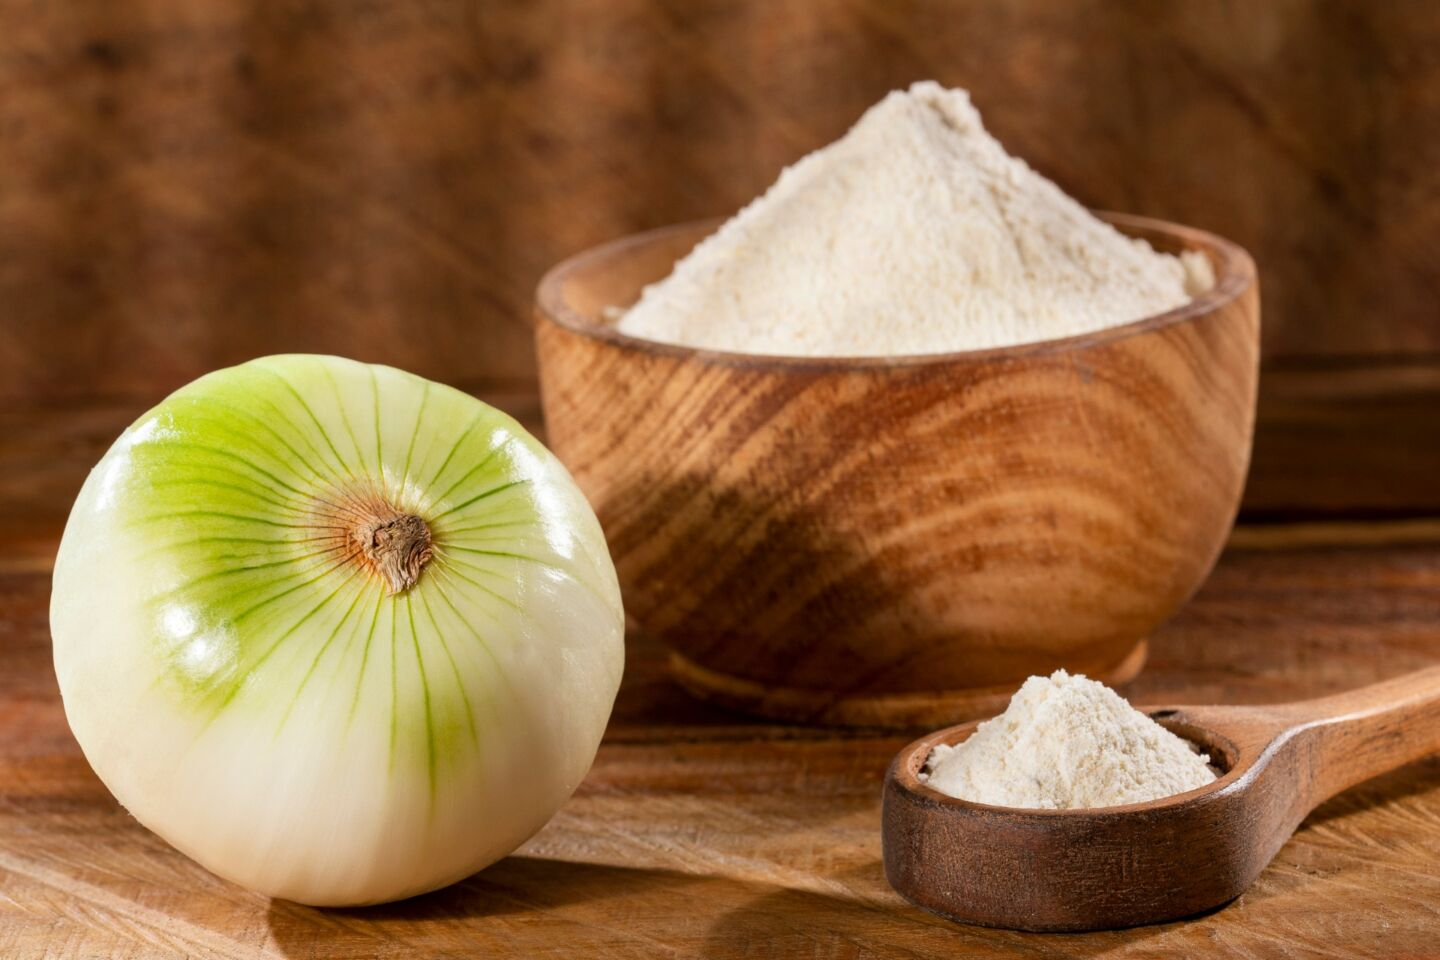 10 southern seasonings - onion powder